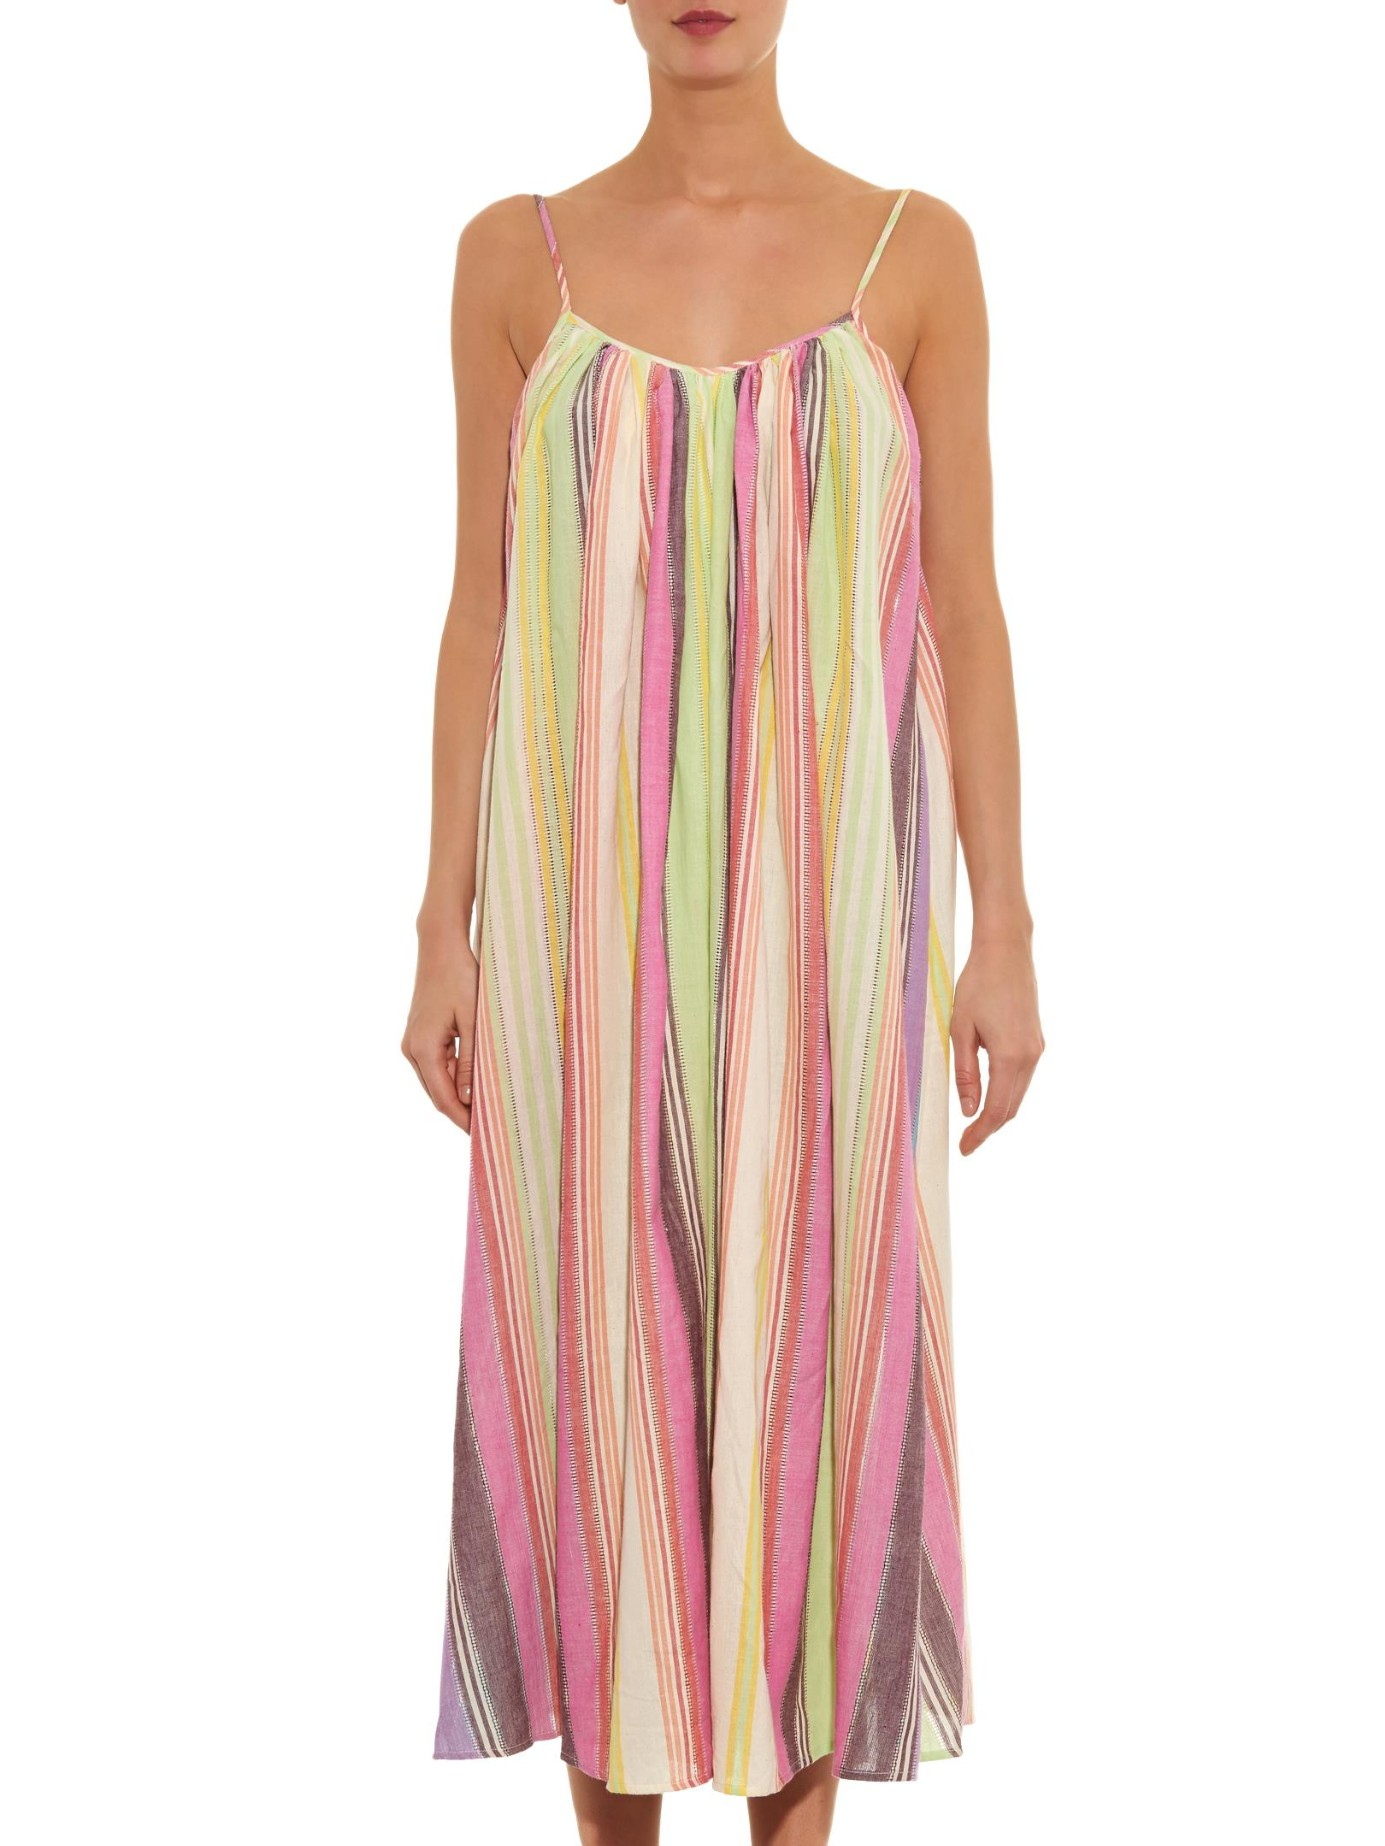 Mara Hoffman Rainbow Stripe Cotton Dress in Pink - Lyst